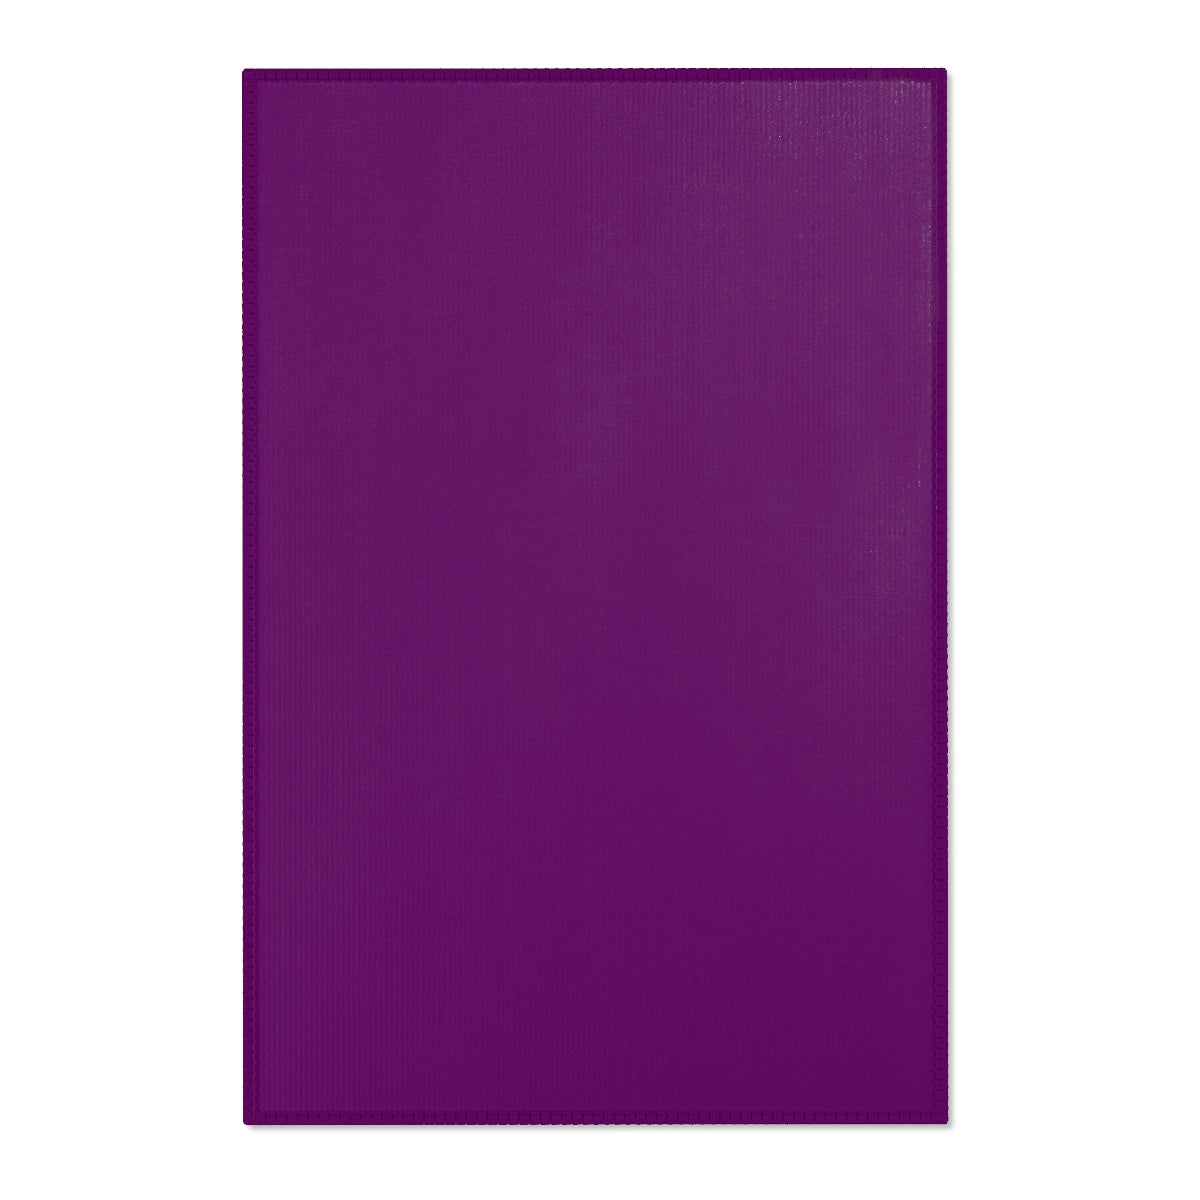 Purple Area Rug Carpet, Home Floor Decor Chic 2x3 4x6 3x5 Designer Living Room Accent Decorative Bedroom Mat Starcove Fashion